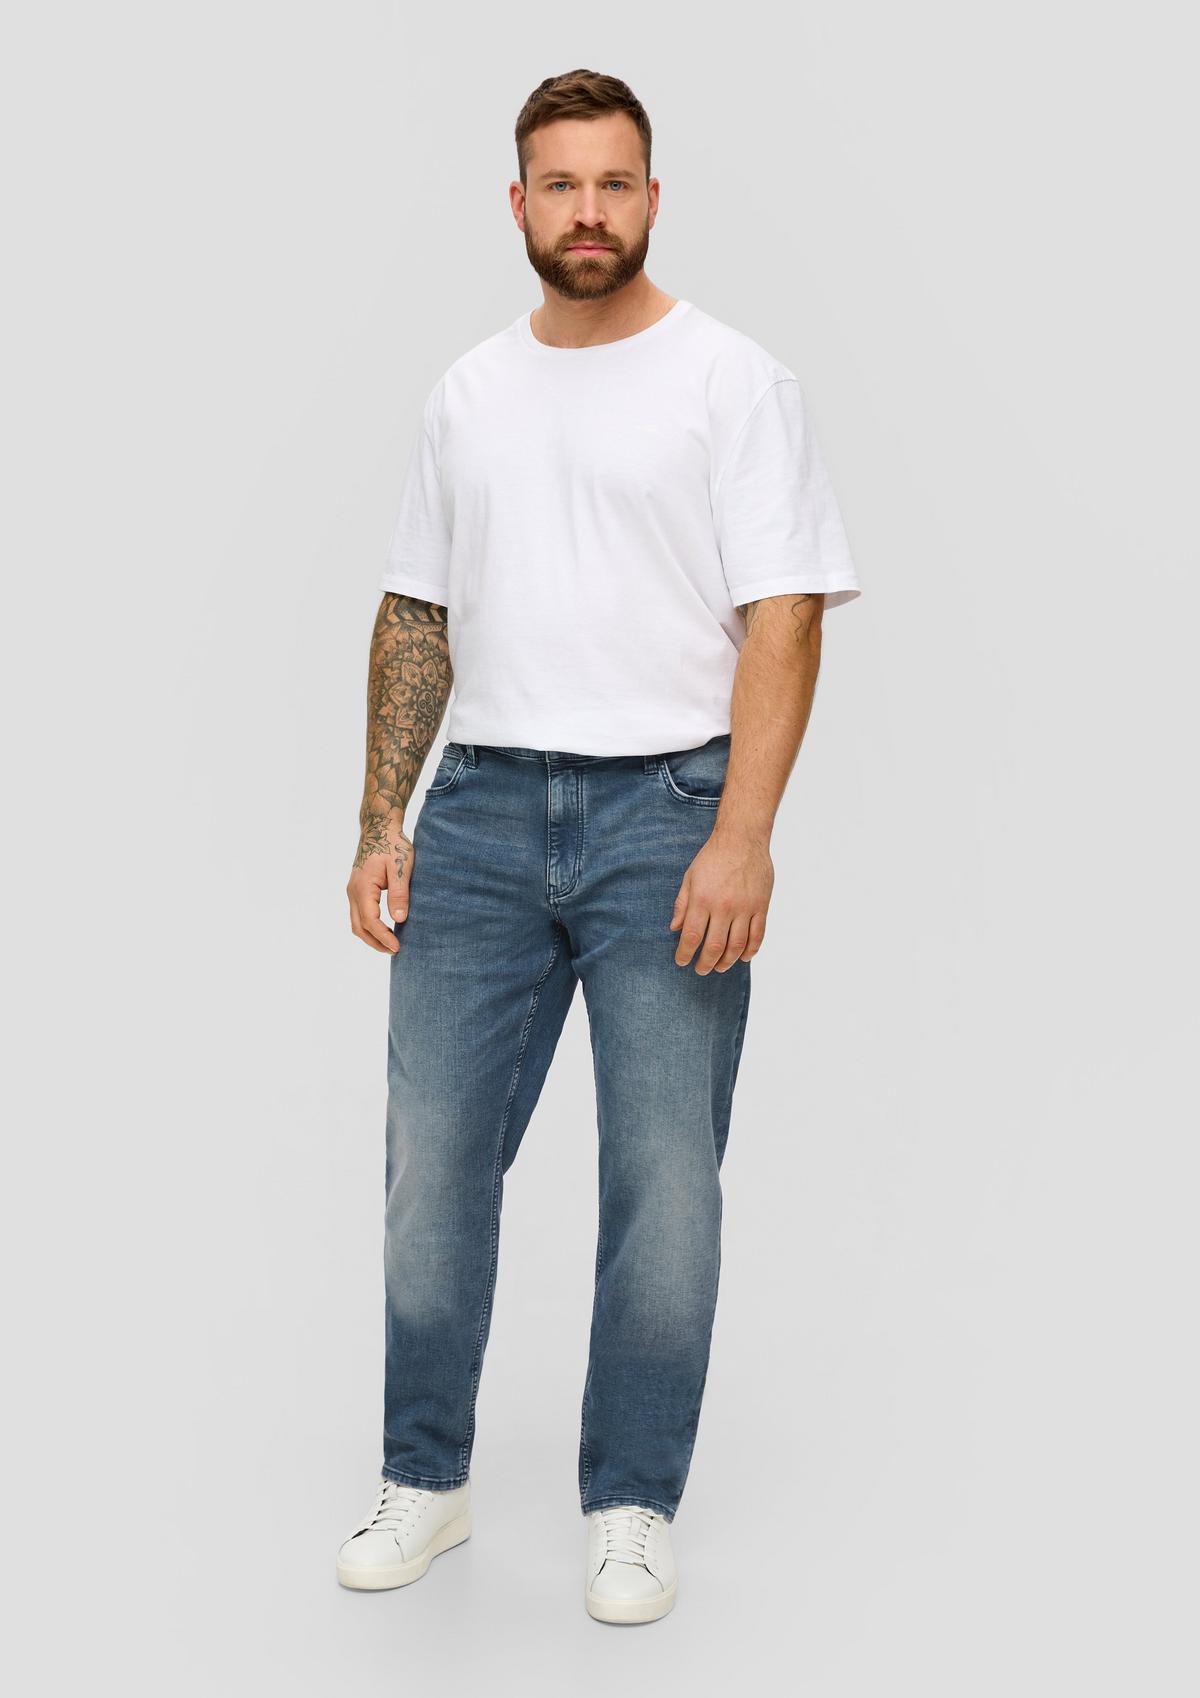 s.Oliver Jeans York / Regular Fit / Mid Rise / Regular Leg